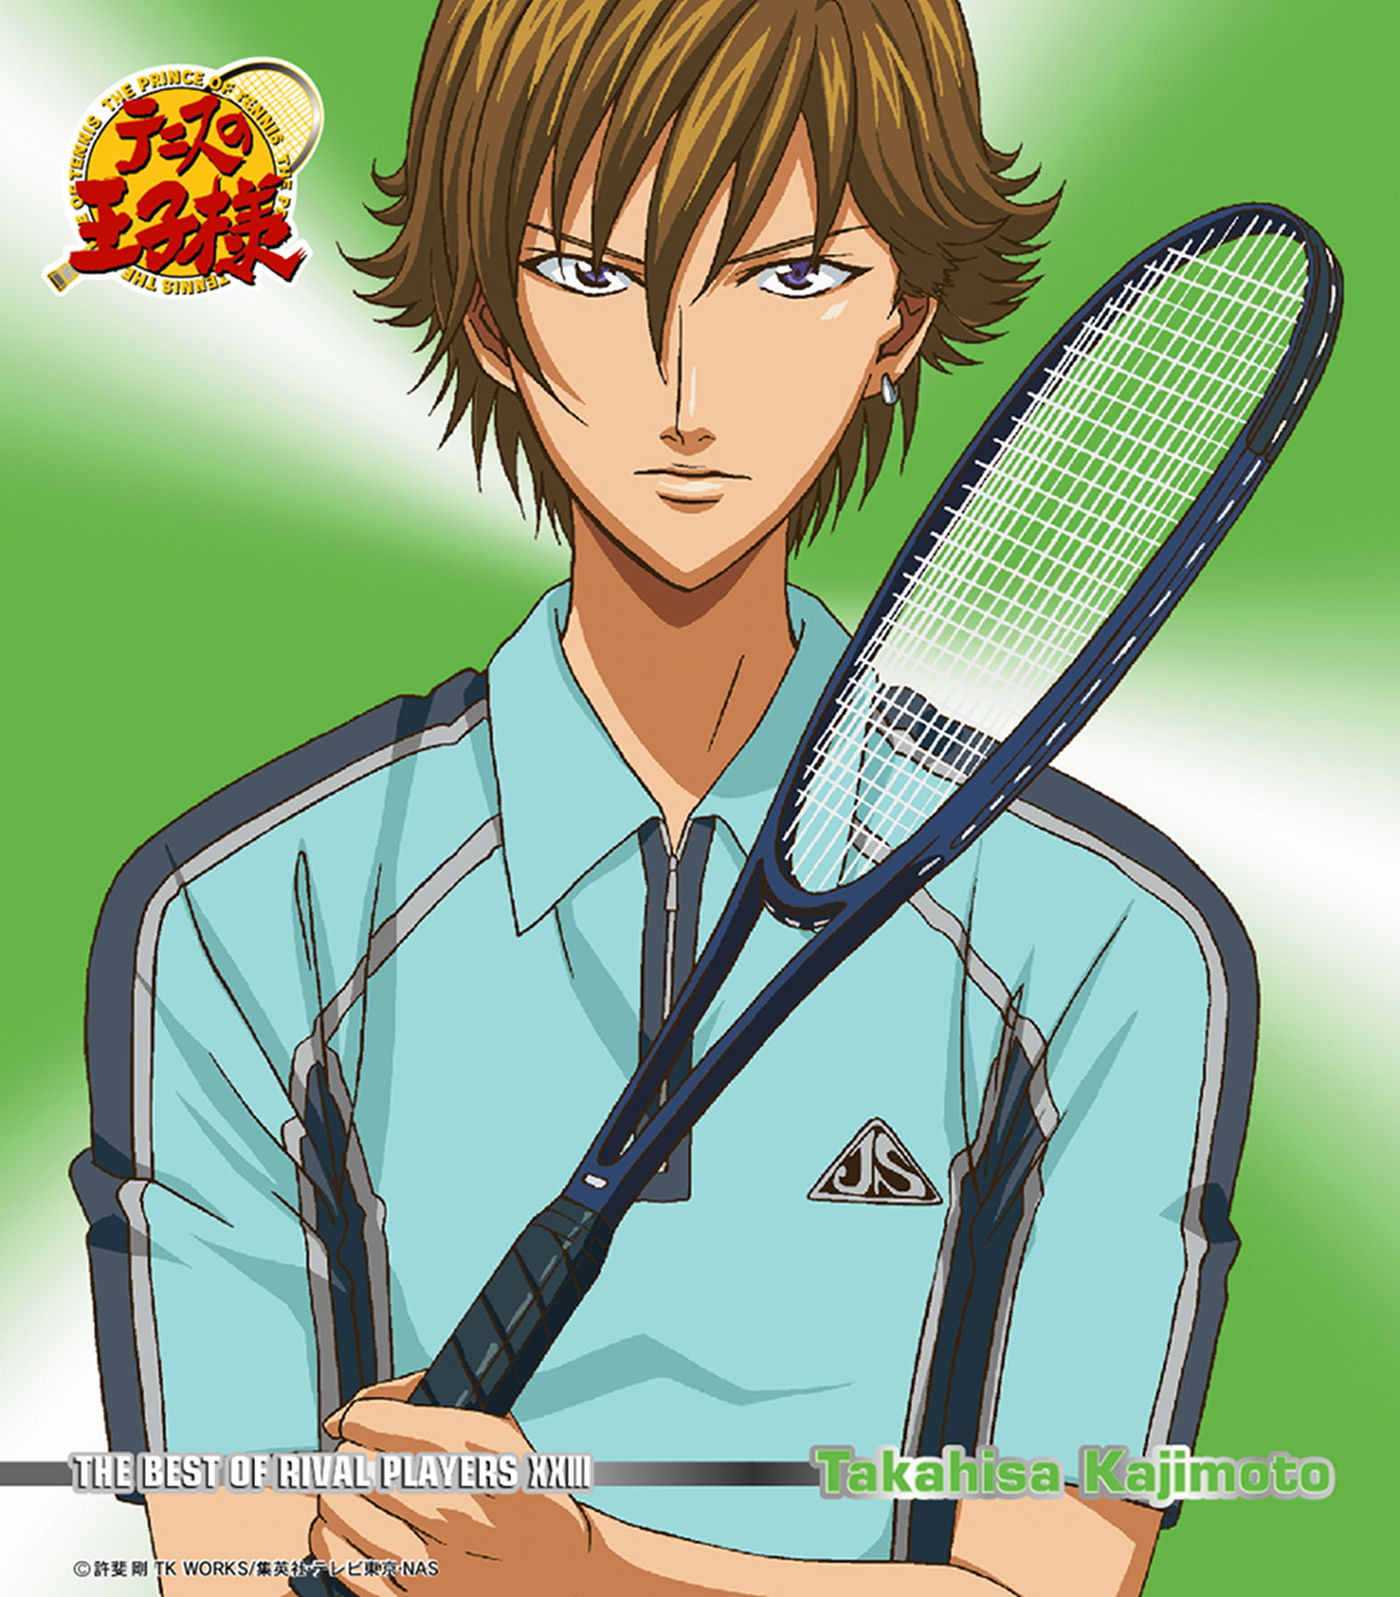 THE BEST OF RIVAL PLAYERS ⅩⅩⅢ Takahisa Kajimotoアニメ「テニスの王子様」 - Single						Популярное